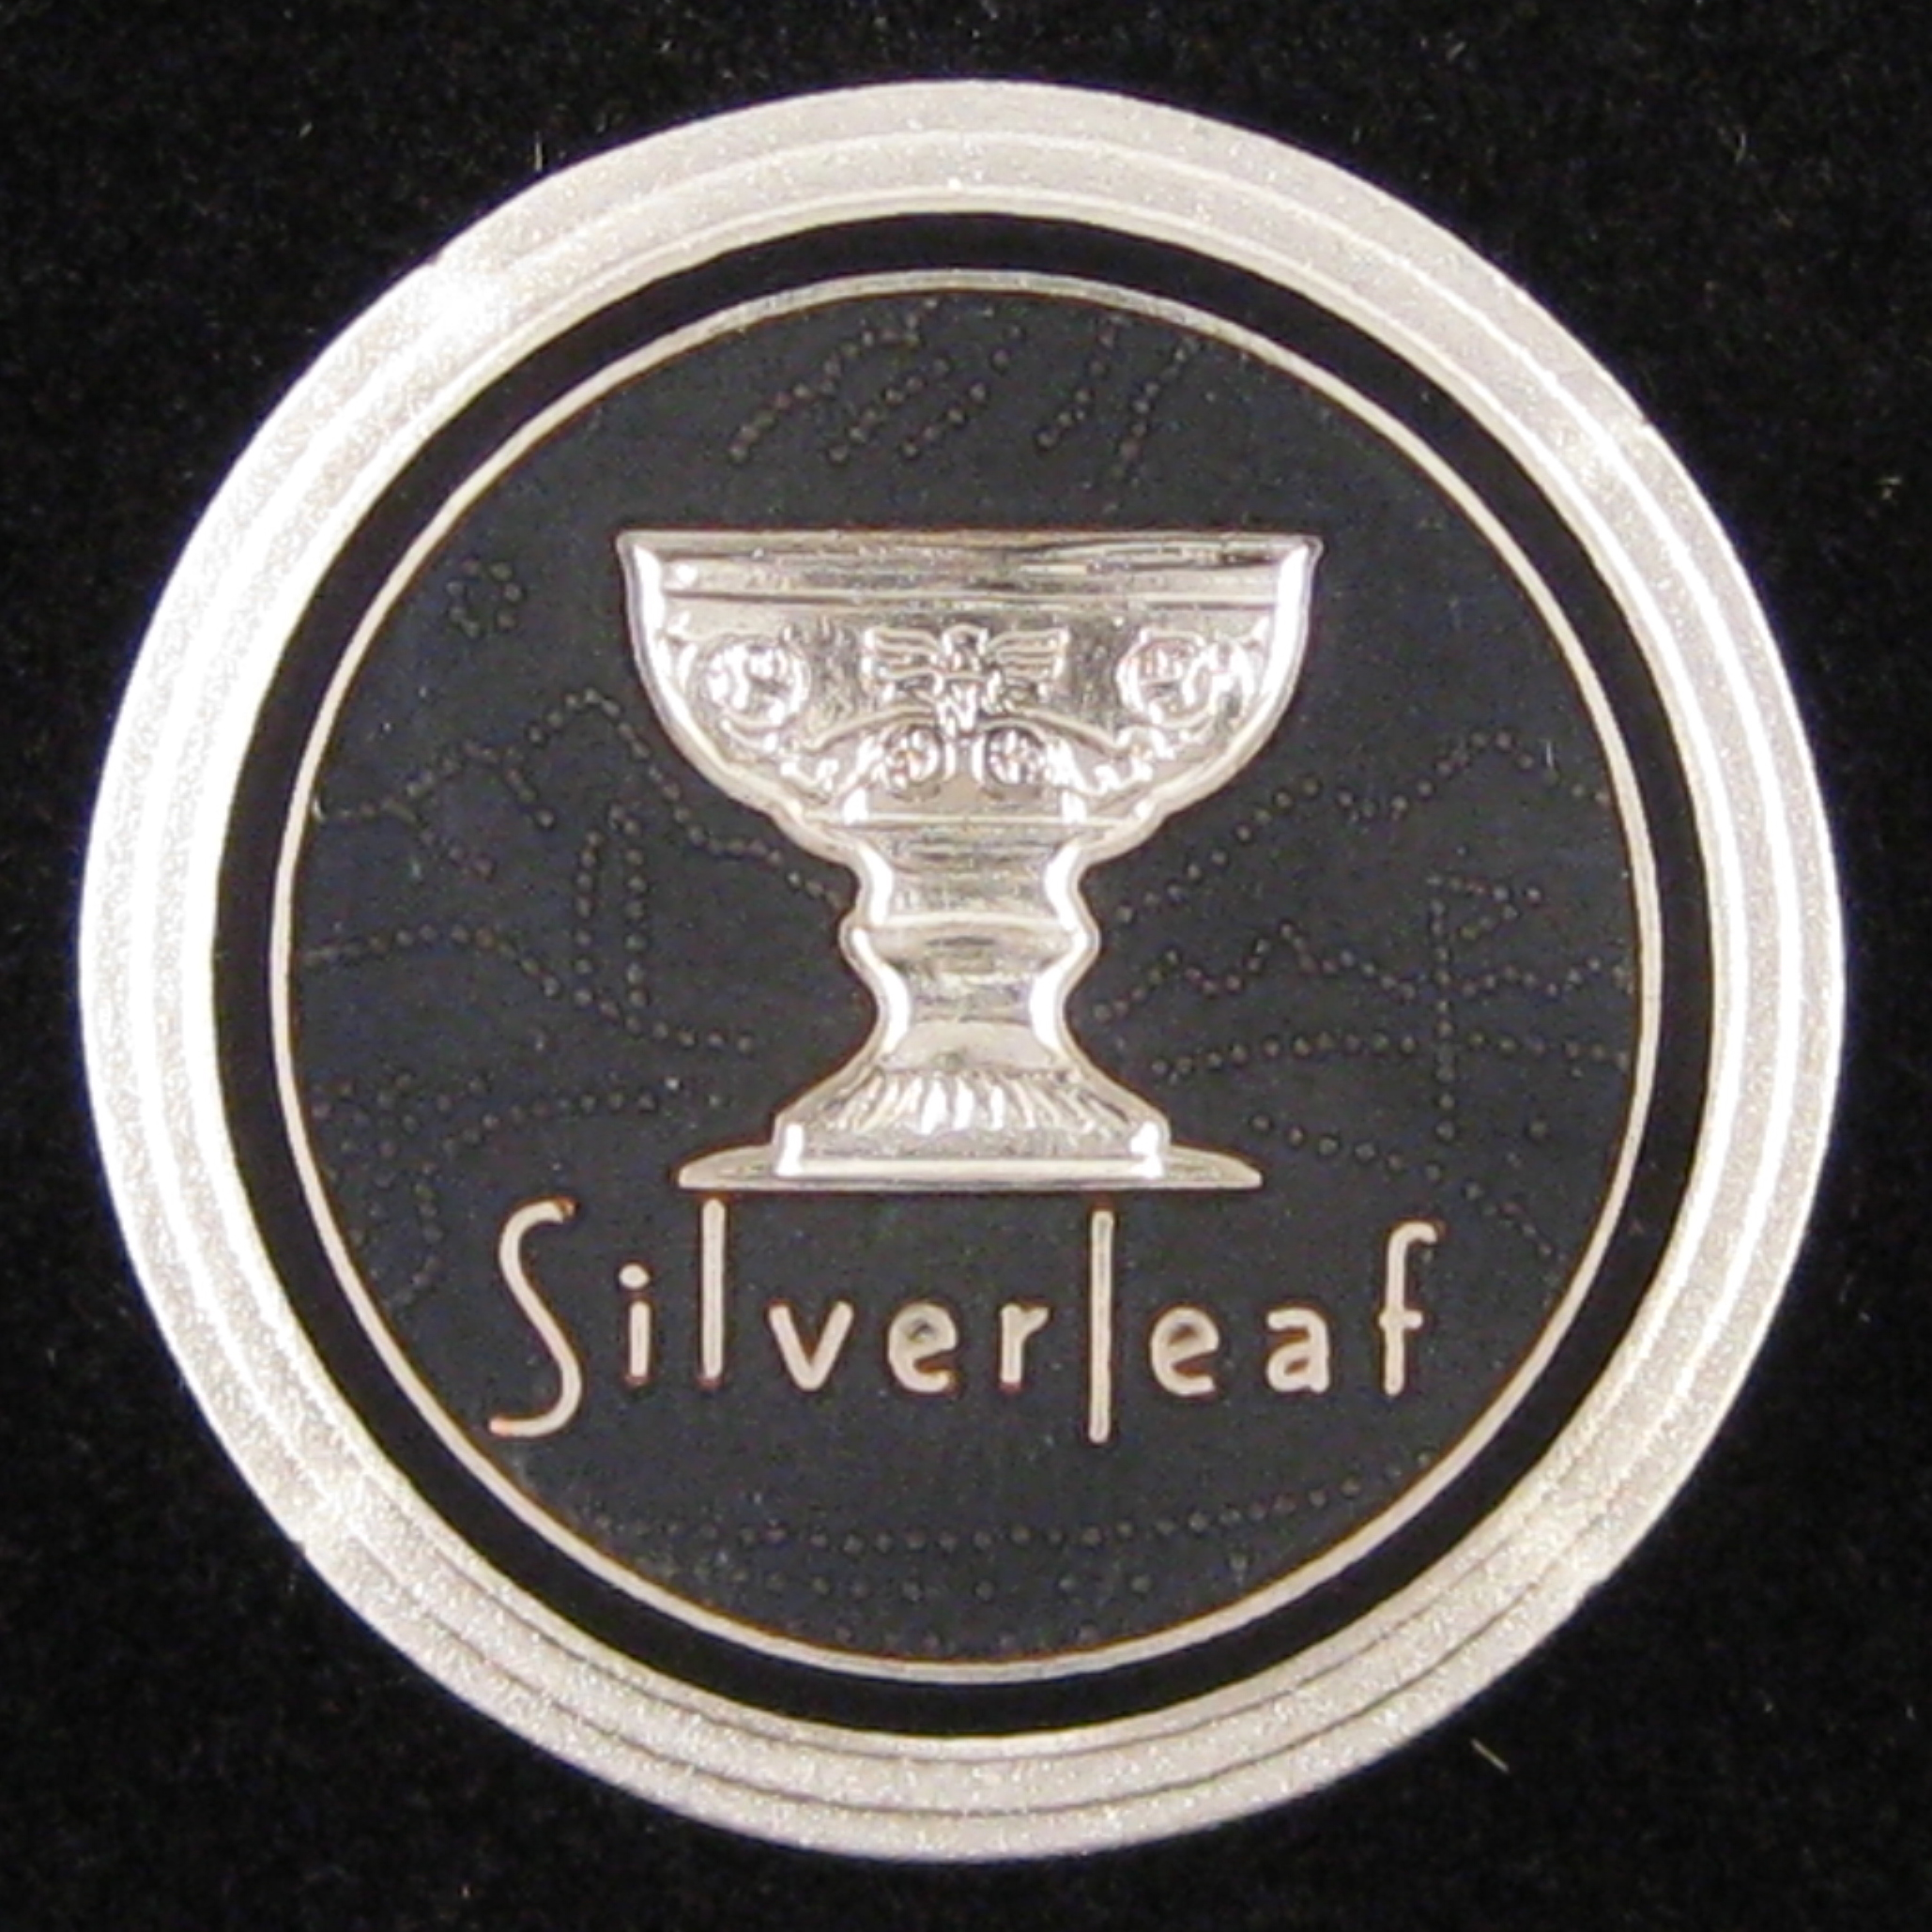 Silverleaf - Front Gray